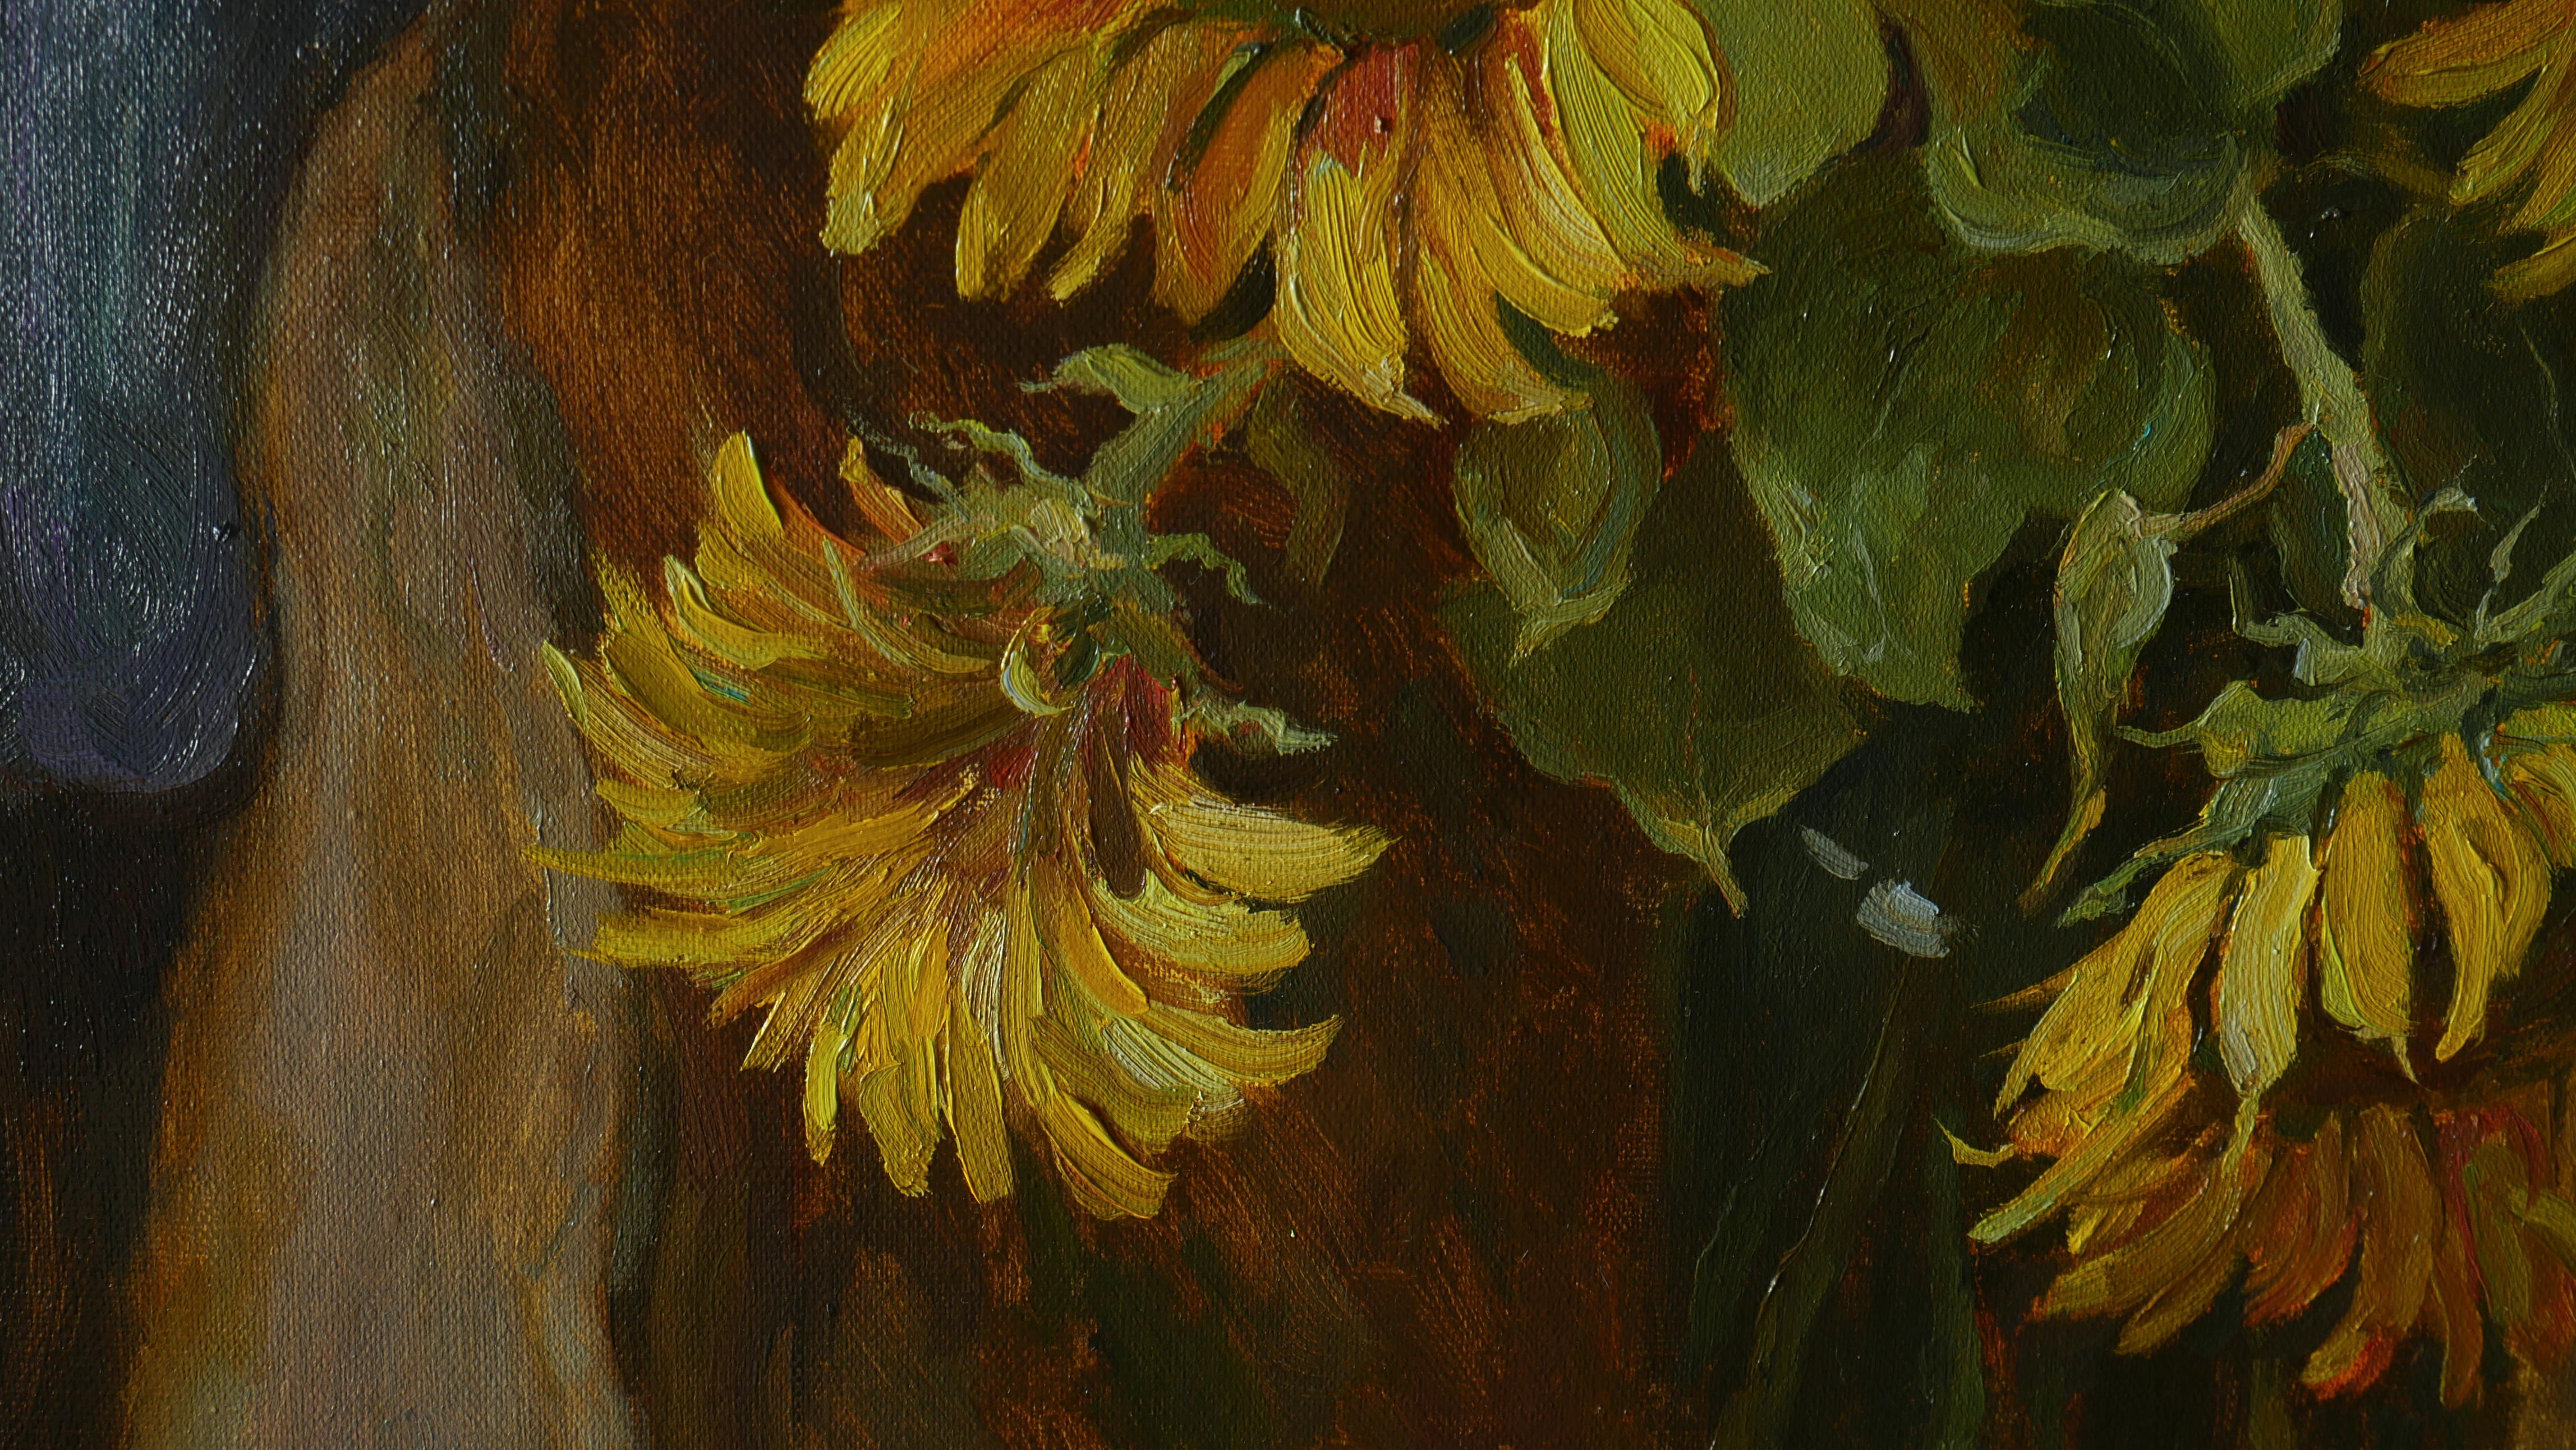 Sunflowers Near The Blue Curtain - sunflowers still life painting - Impressionist Painting by Nikolay Dmitriev